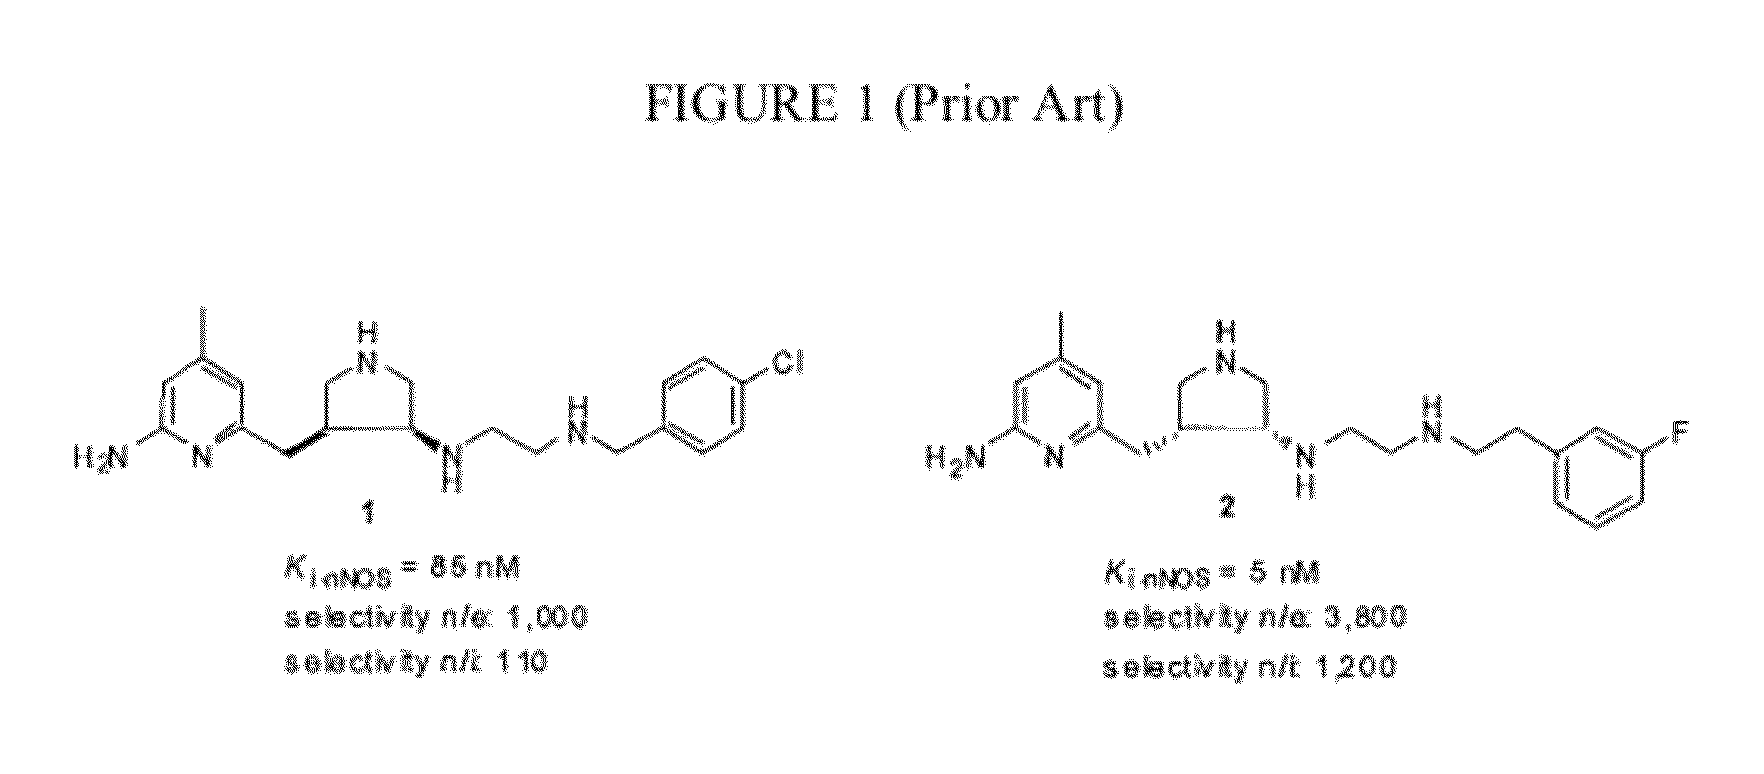 Intramolecular hydrogen-bonded nitric oxide synthase inhibitors